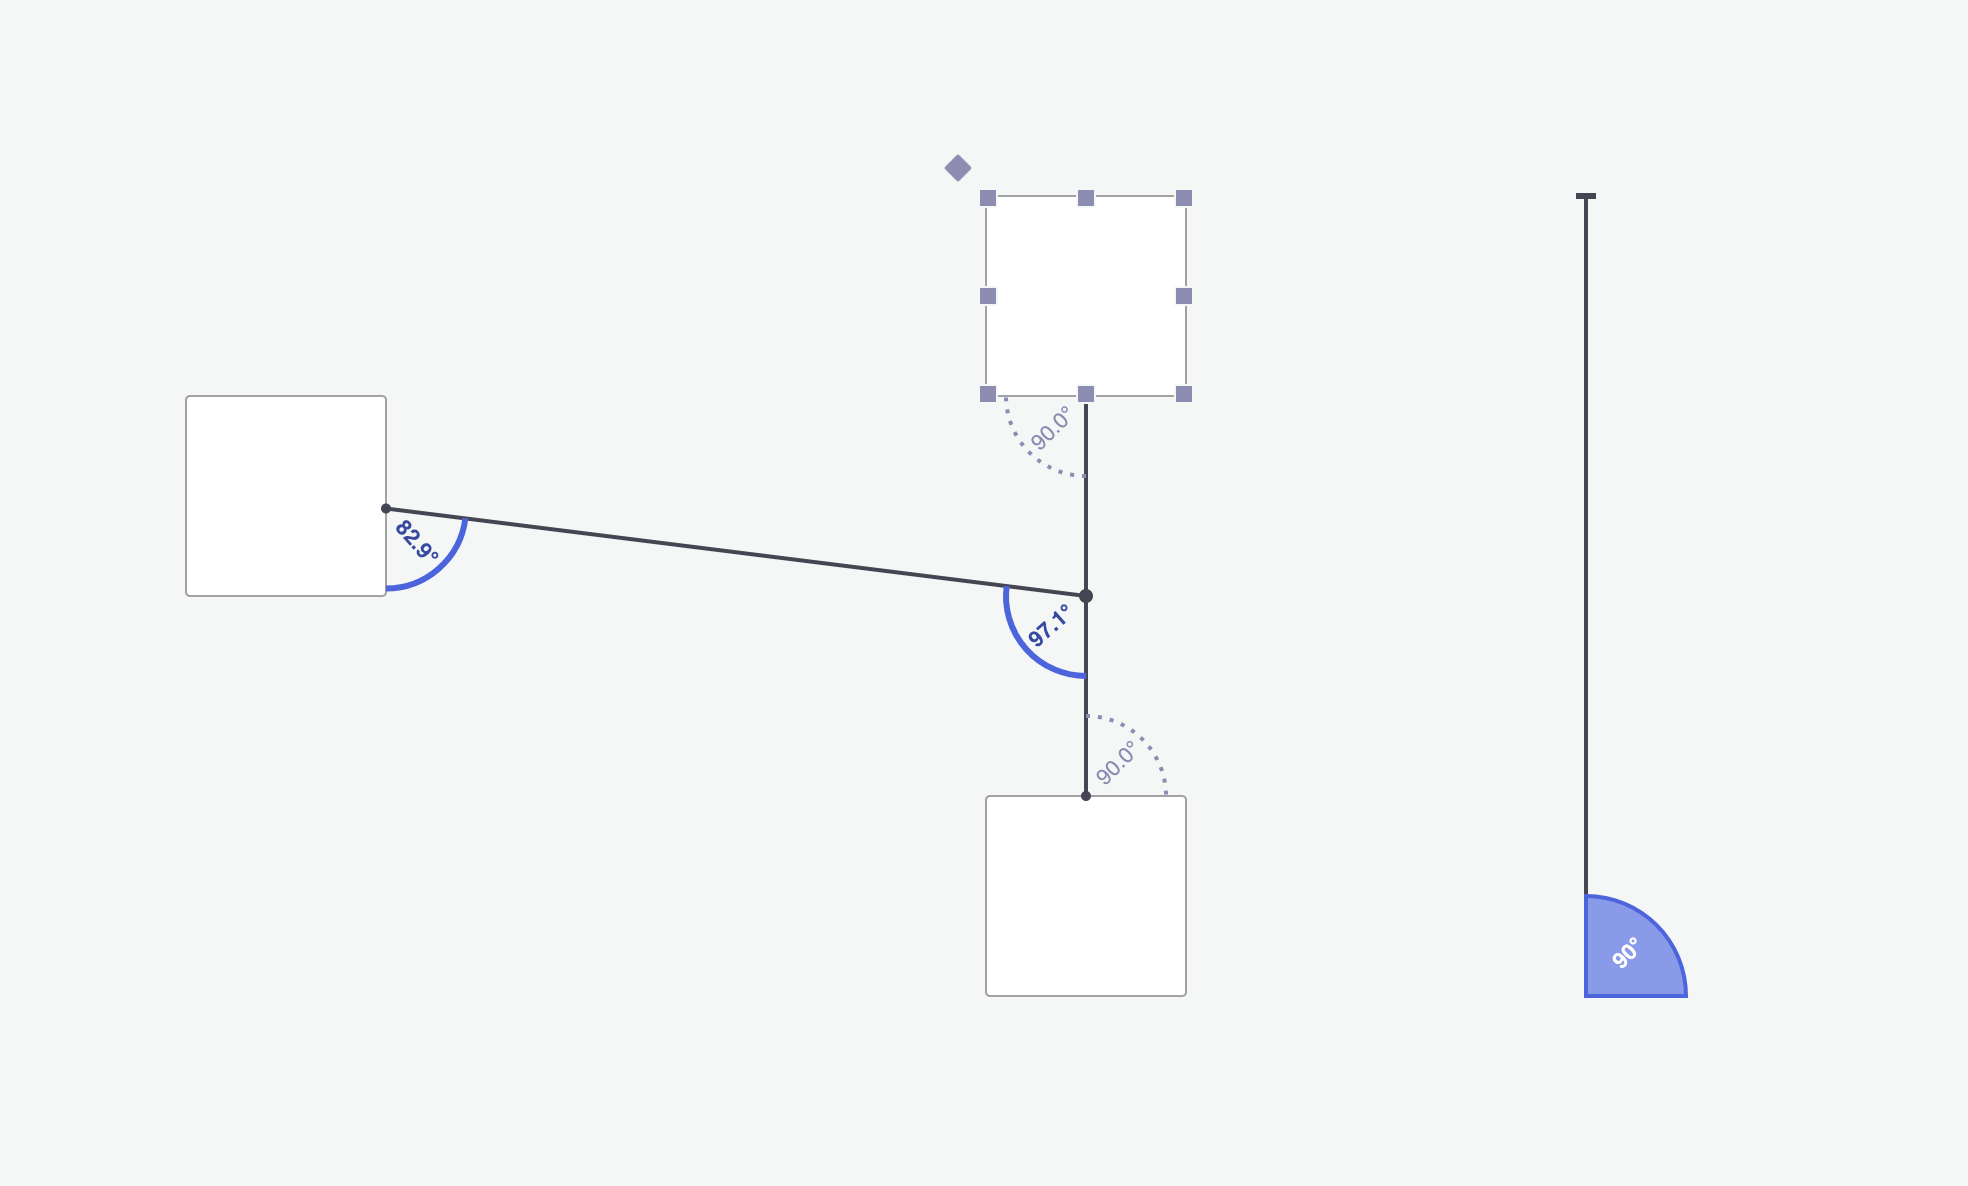 Rappid diagramming toolkit: Angles demo